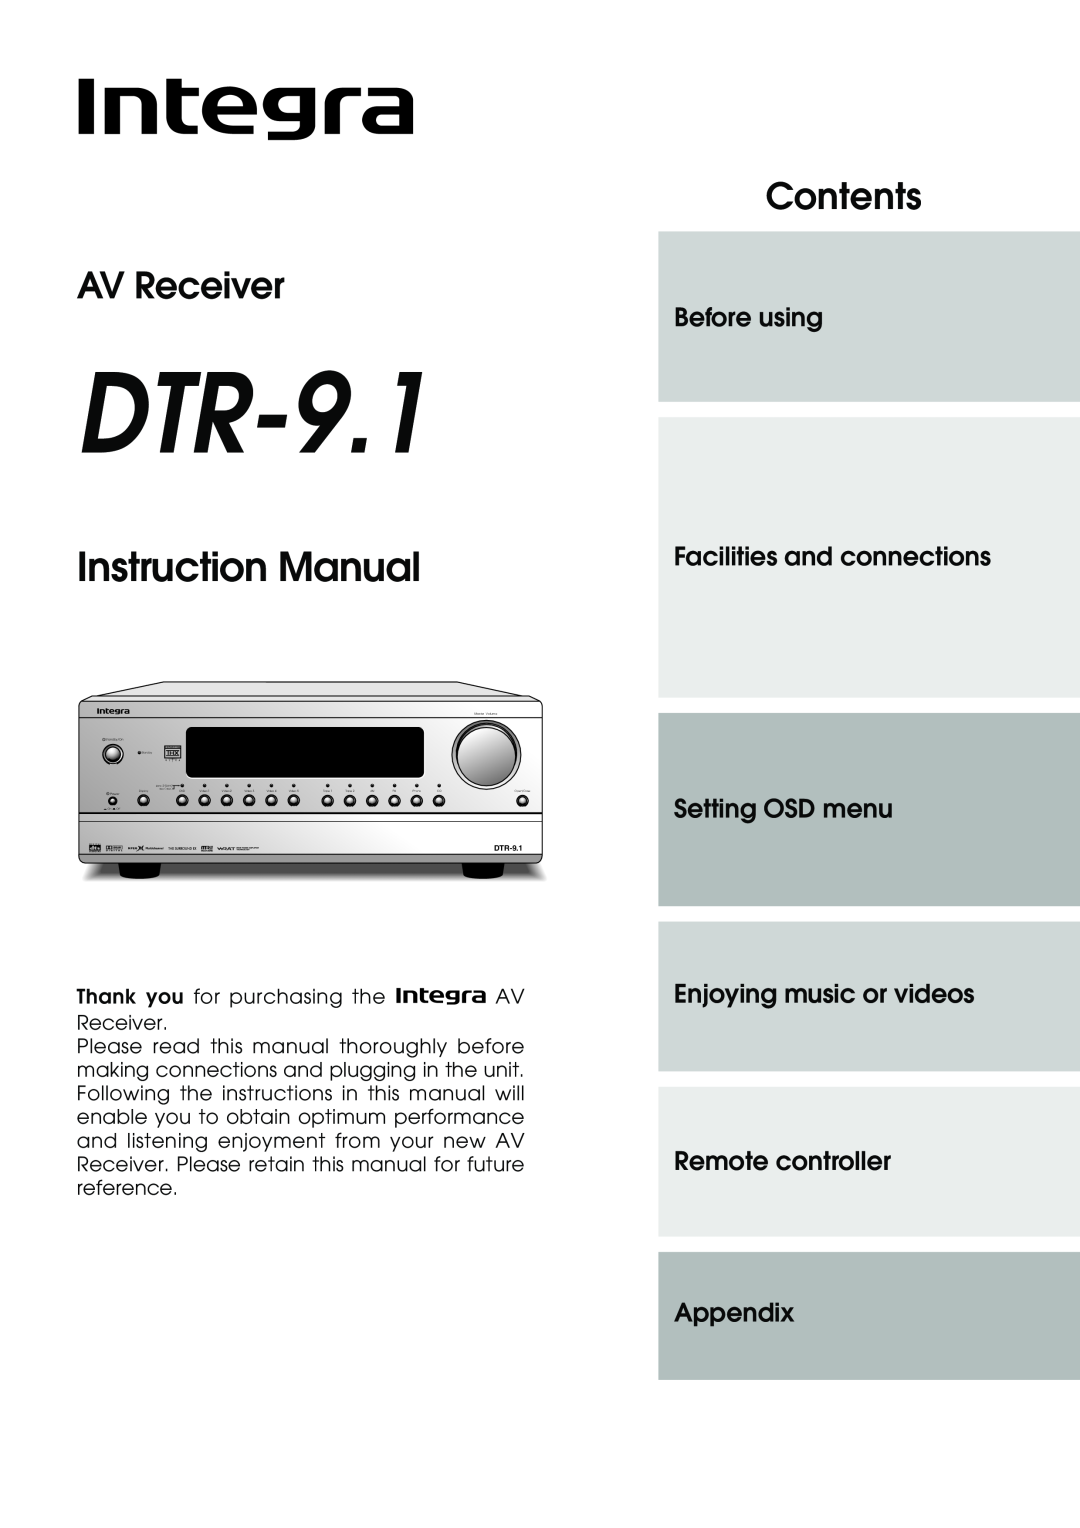 Integra DTR-9.1 appendix AV Receiver, Contents, Before using Facilities and connections, Remote controller, Appendix 